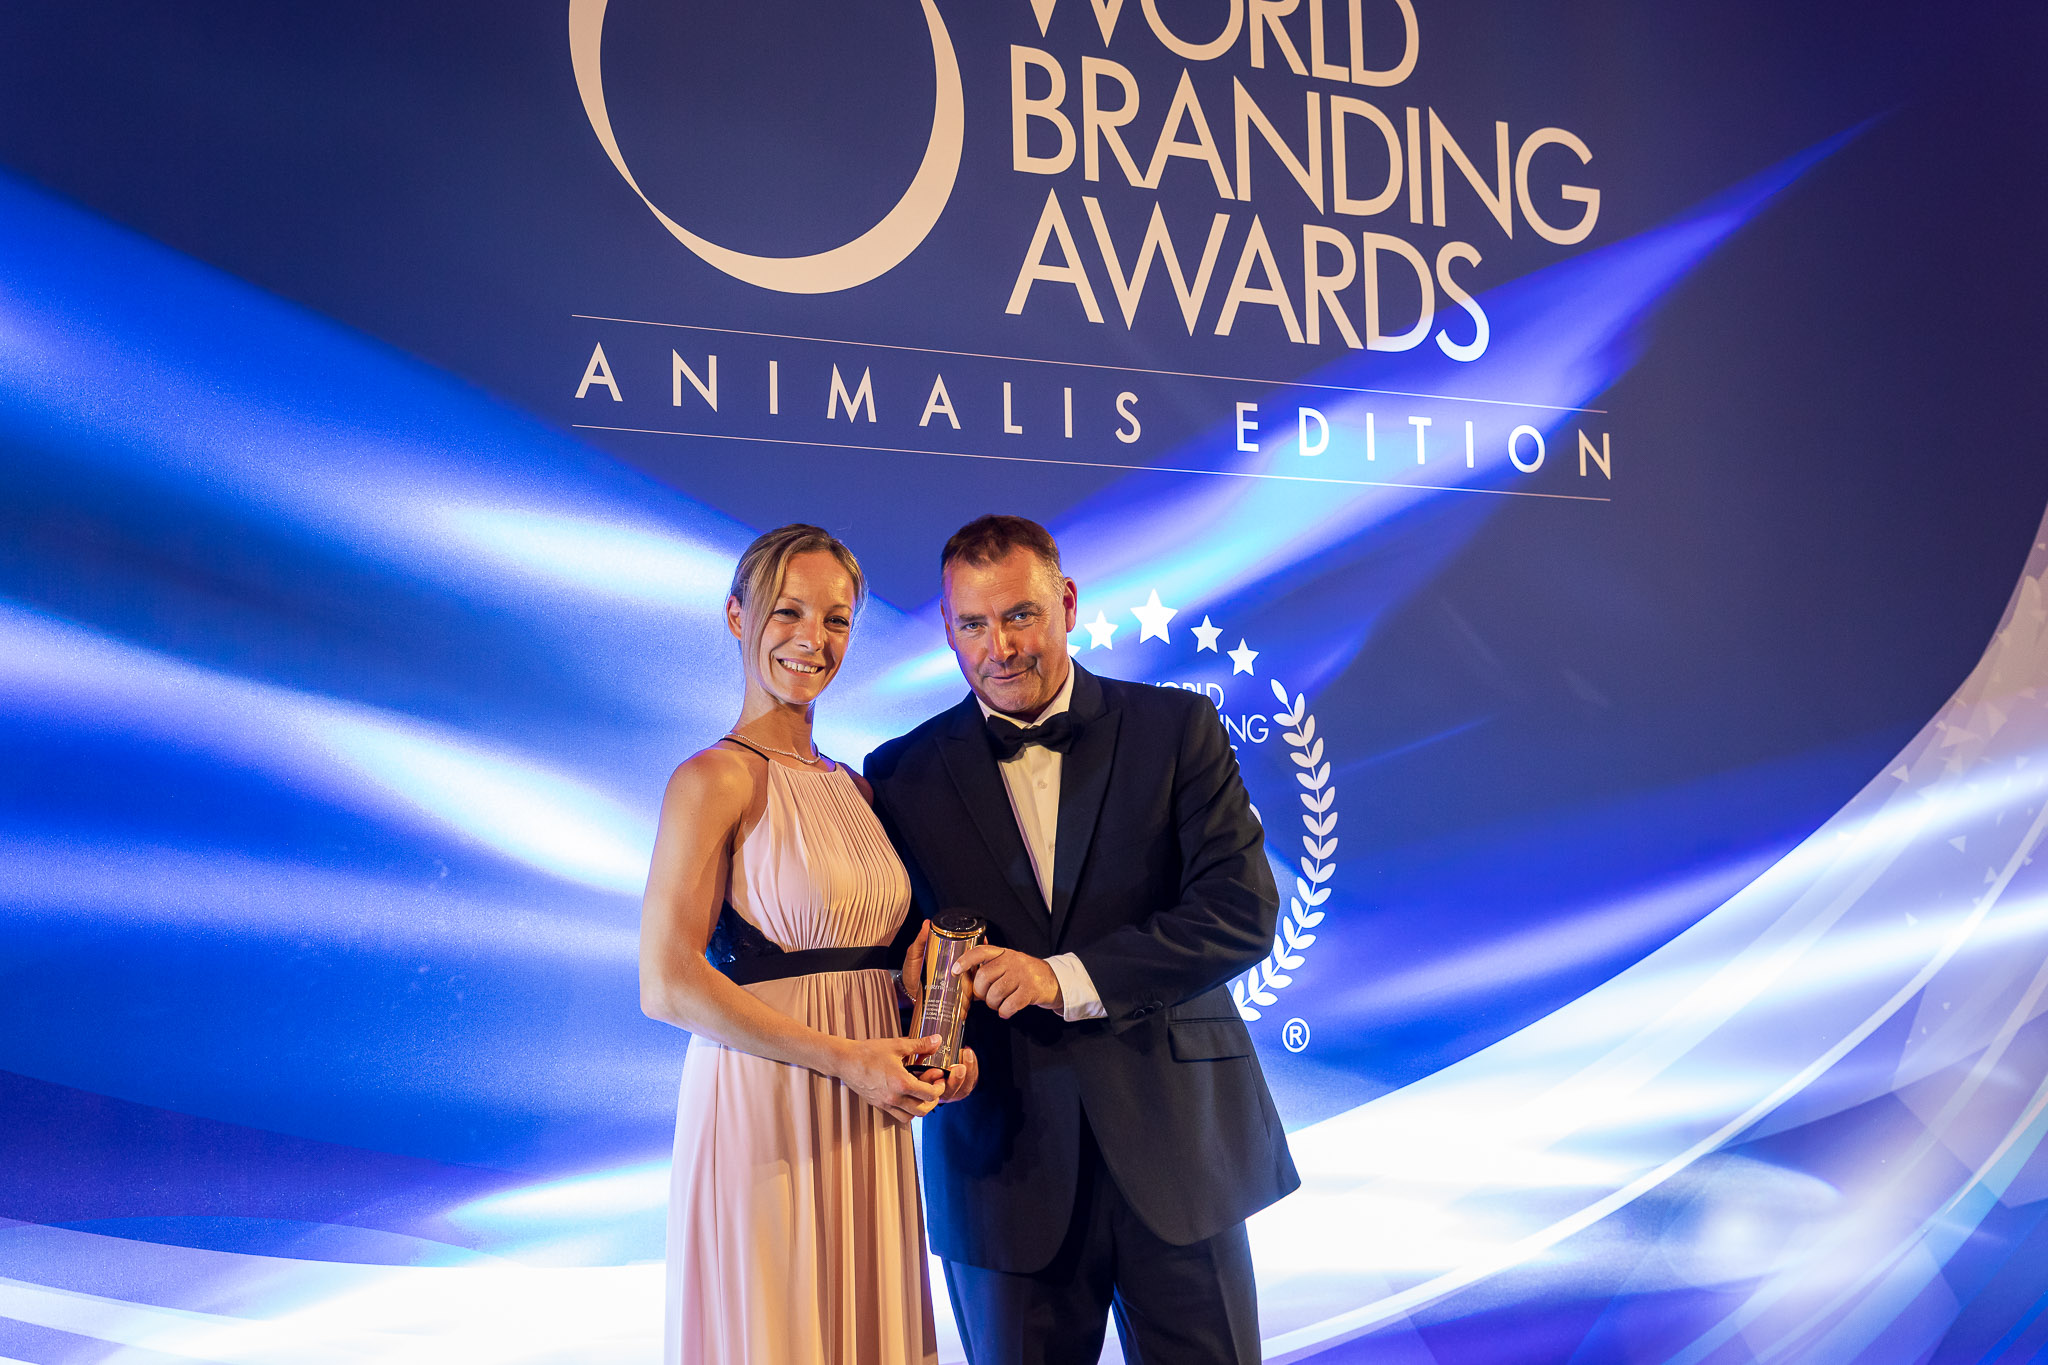 20190703_211956_world_branding_awards_animalis_5812